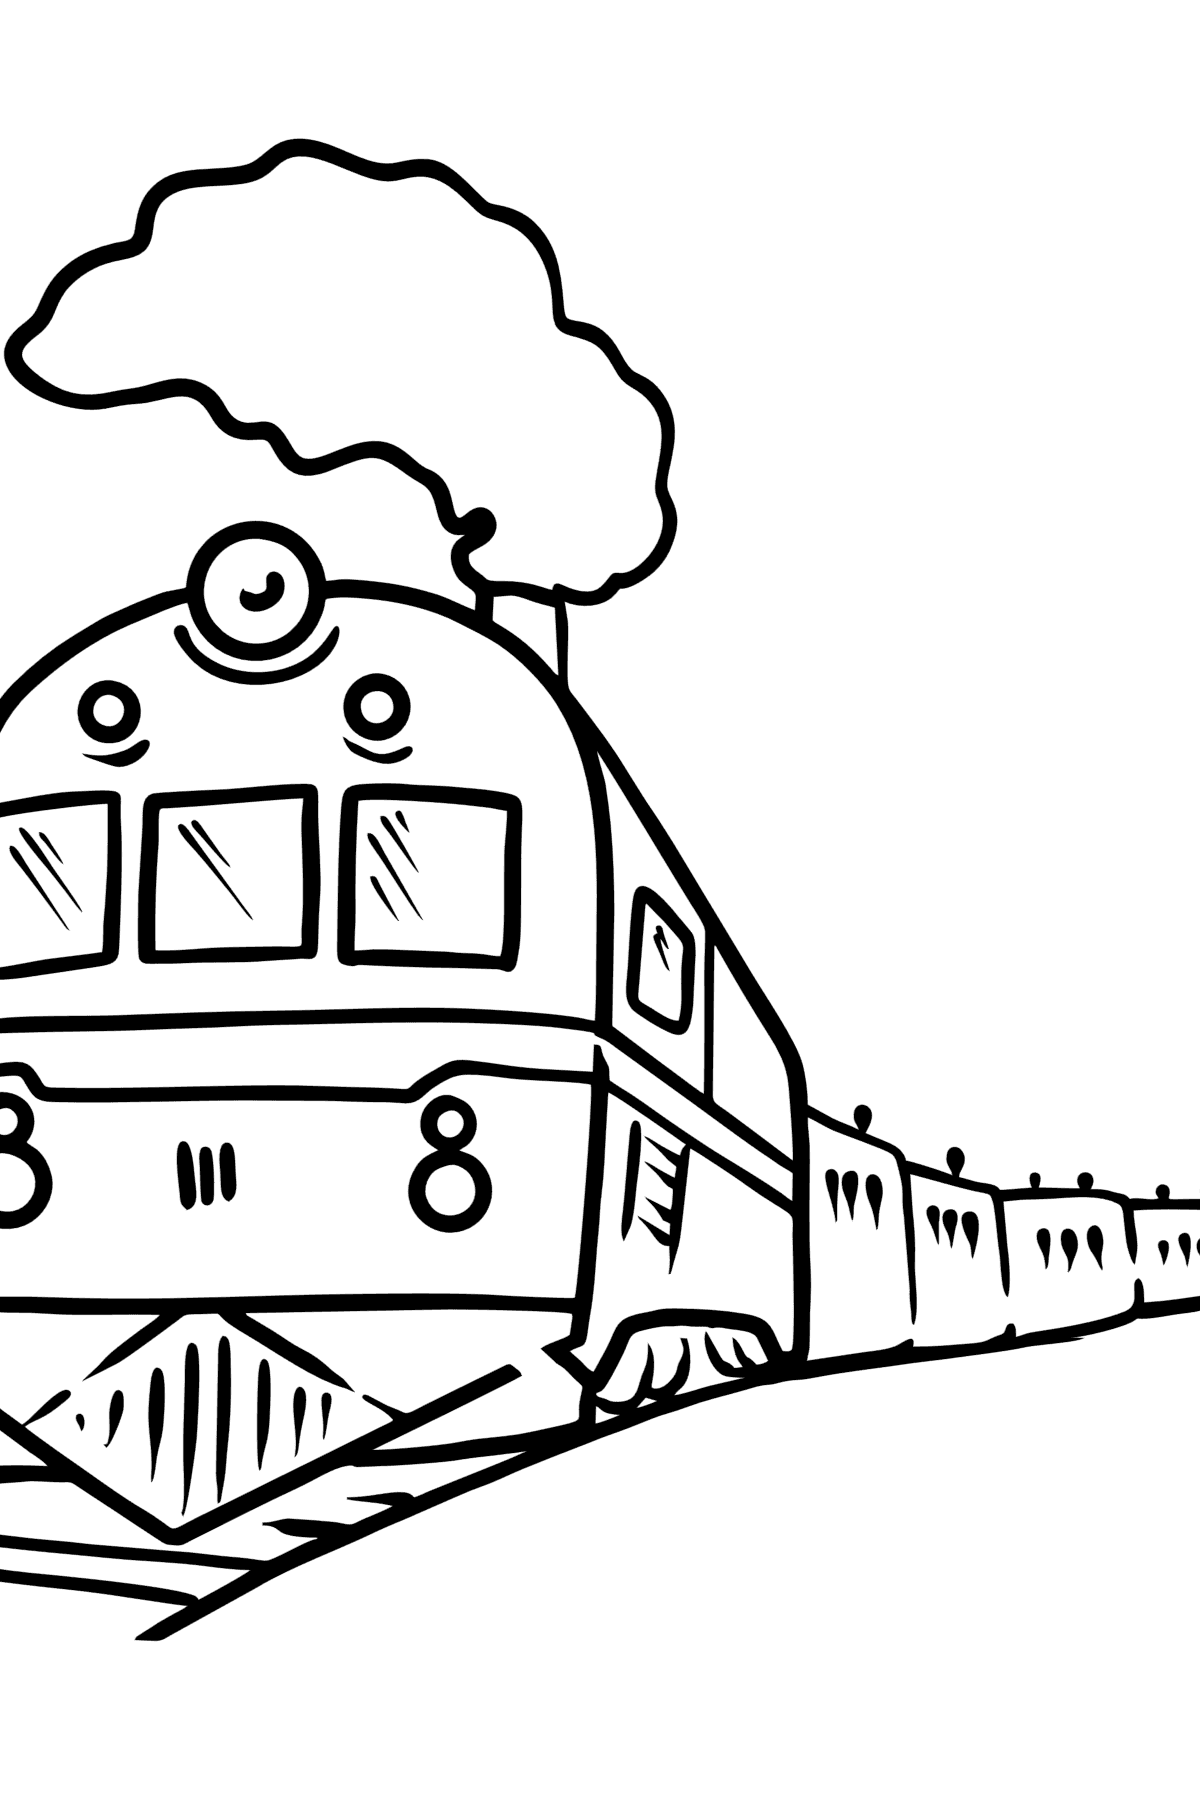 Mewarnai gambar kereta api untuk anak-anak - Mewarnai gambar untuk anak-anak